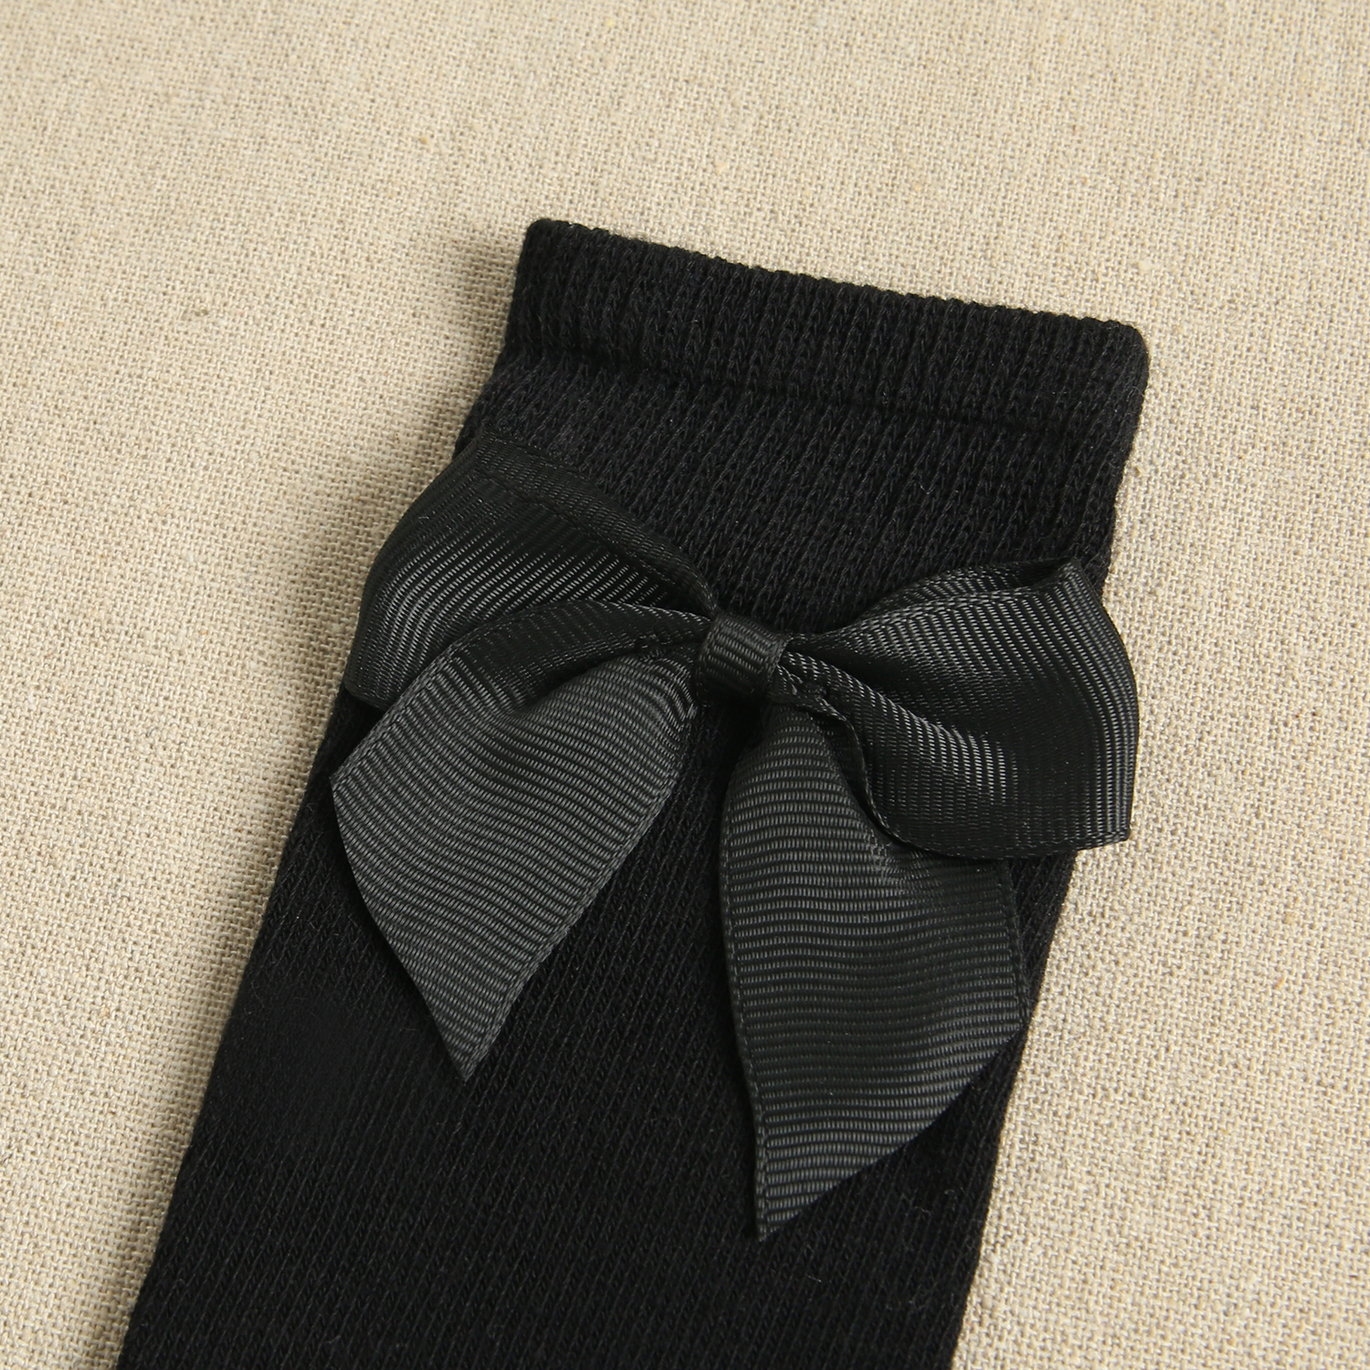 Imagen de Calcetines altos de niña de color negro con lazo 